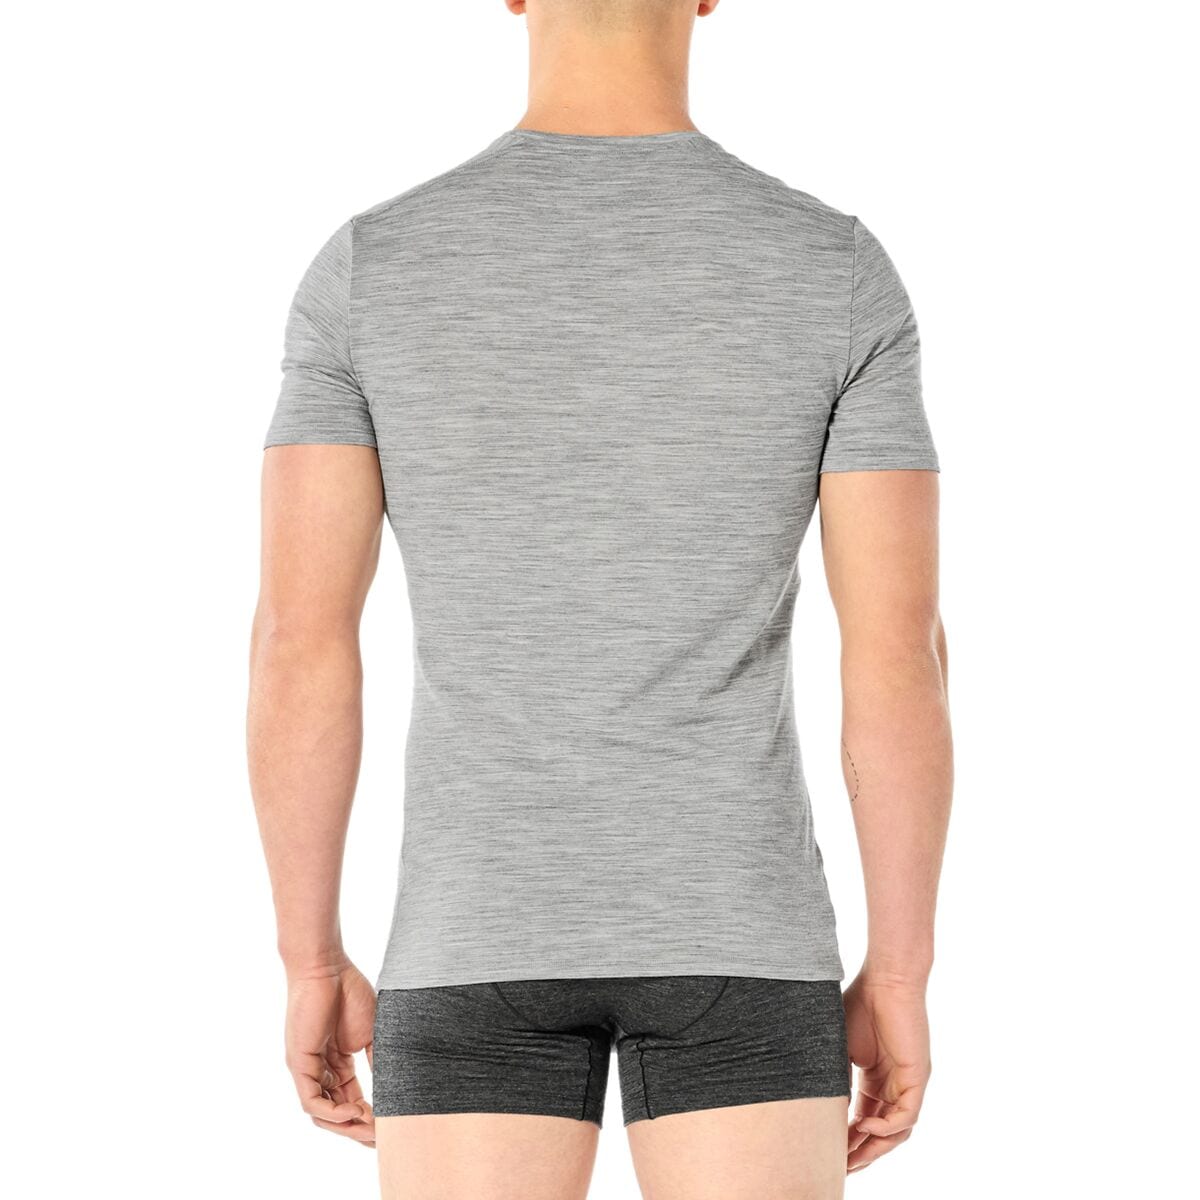 Icebreaker Anatomica short-sleeved shirt